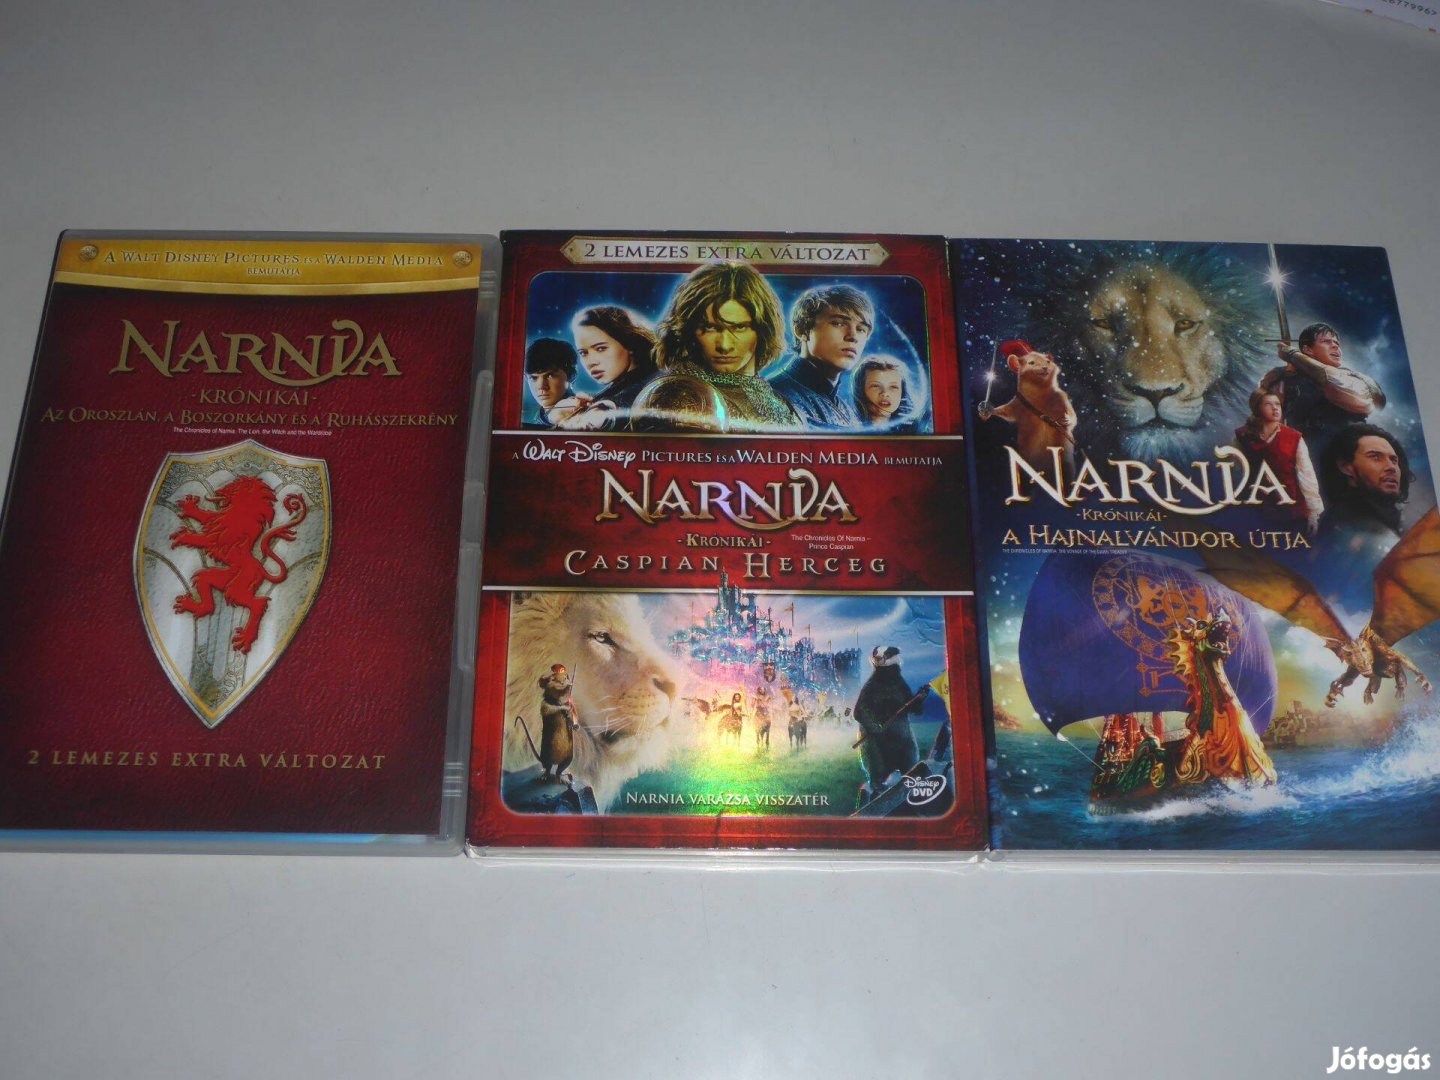 Narnia krónikái 1. 2. 3. DVD film "